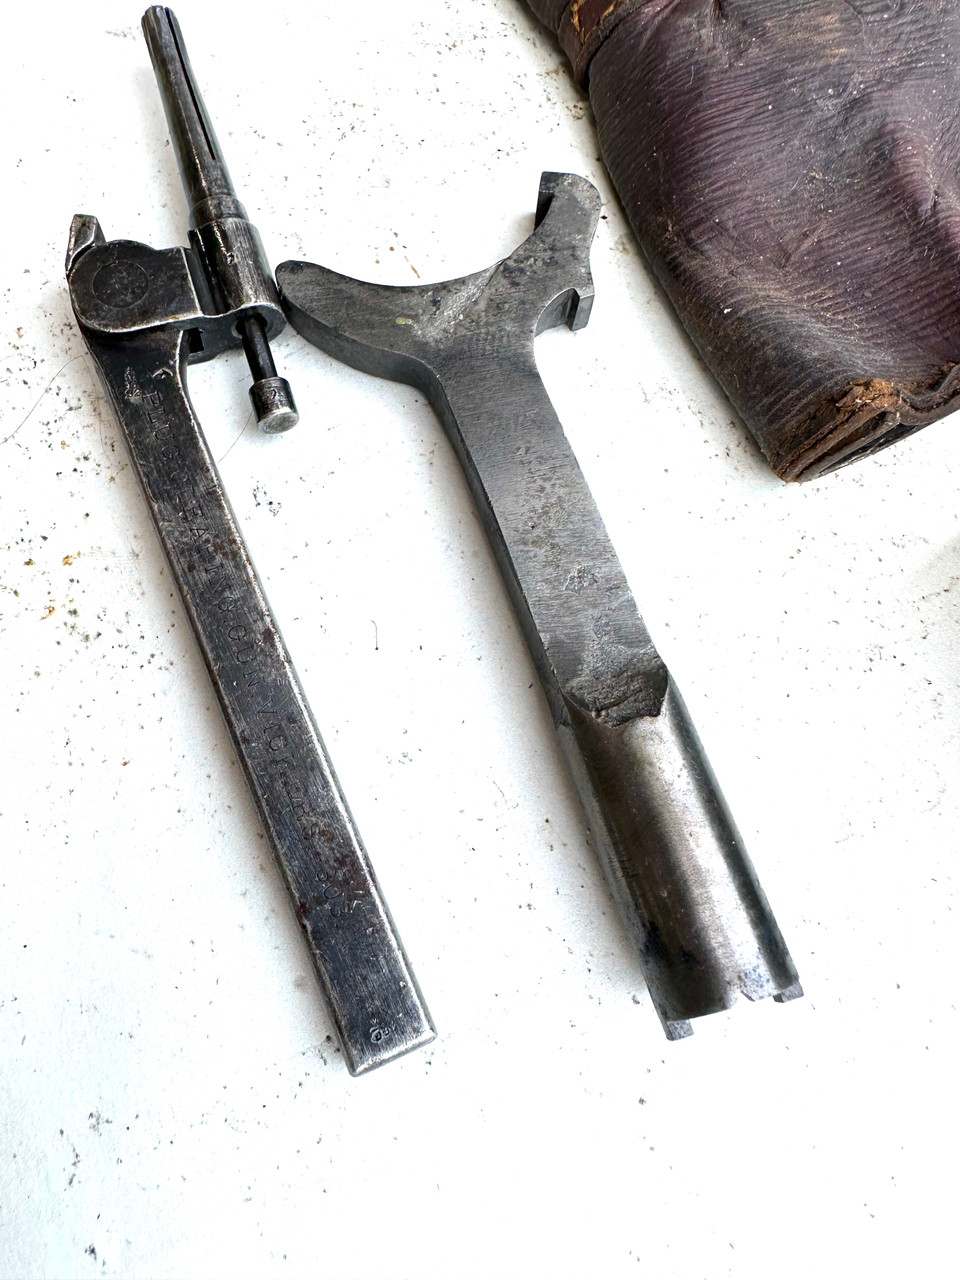 Lot 230719-13: Vickers Tools and Tin Lot